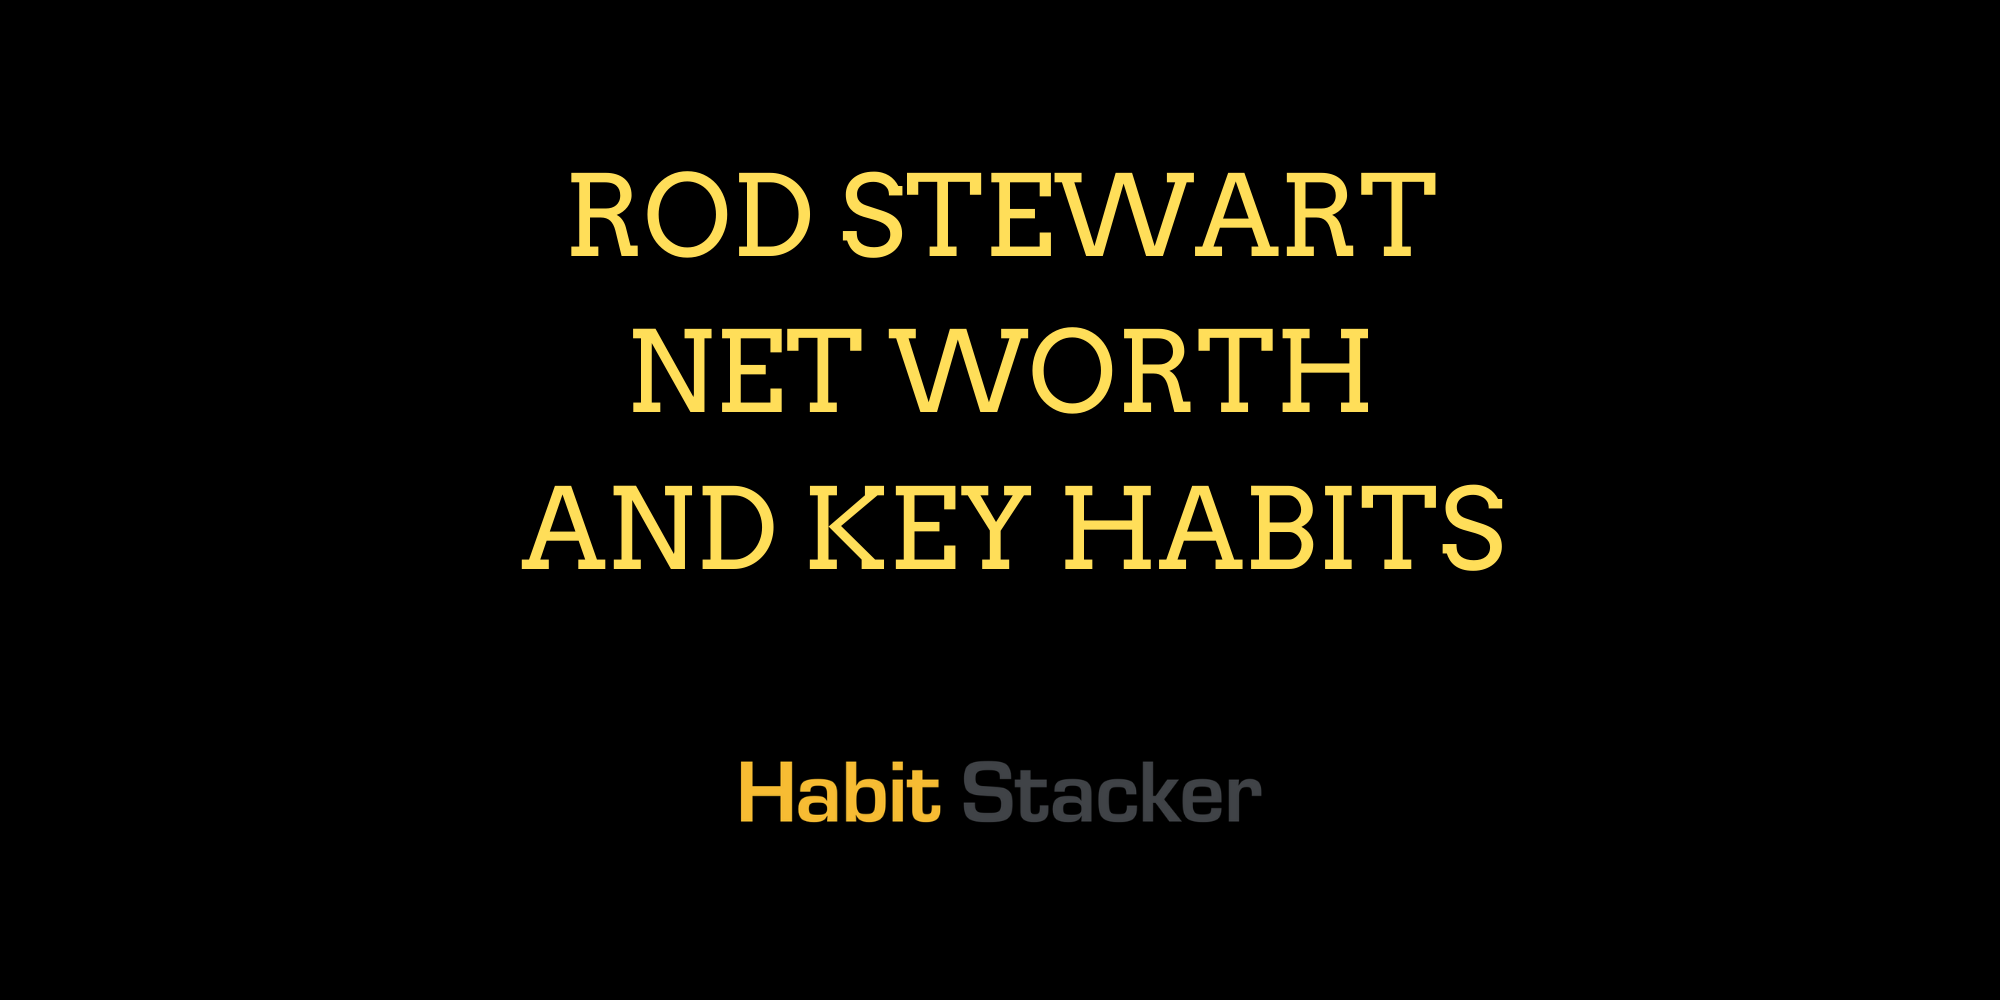 Rod Stewart Net Worth and Key Habits